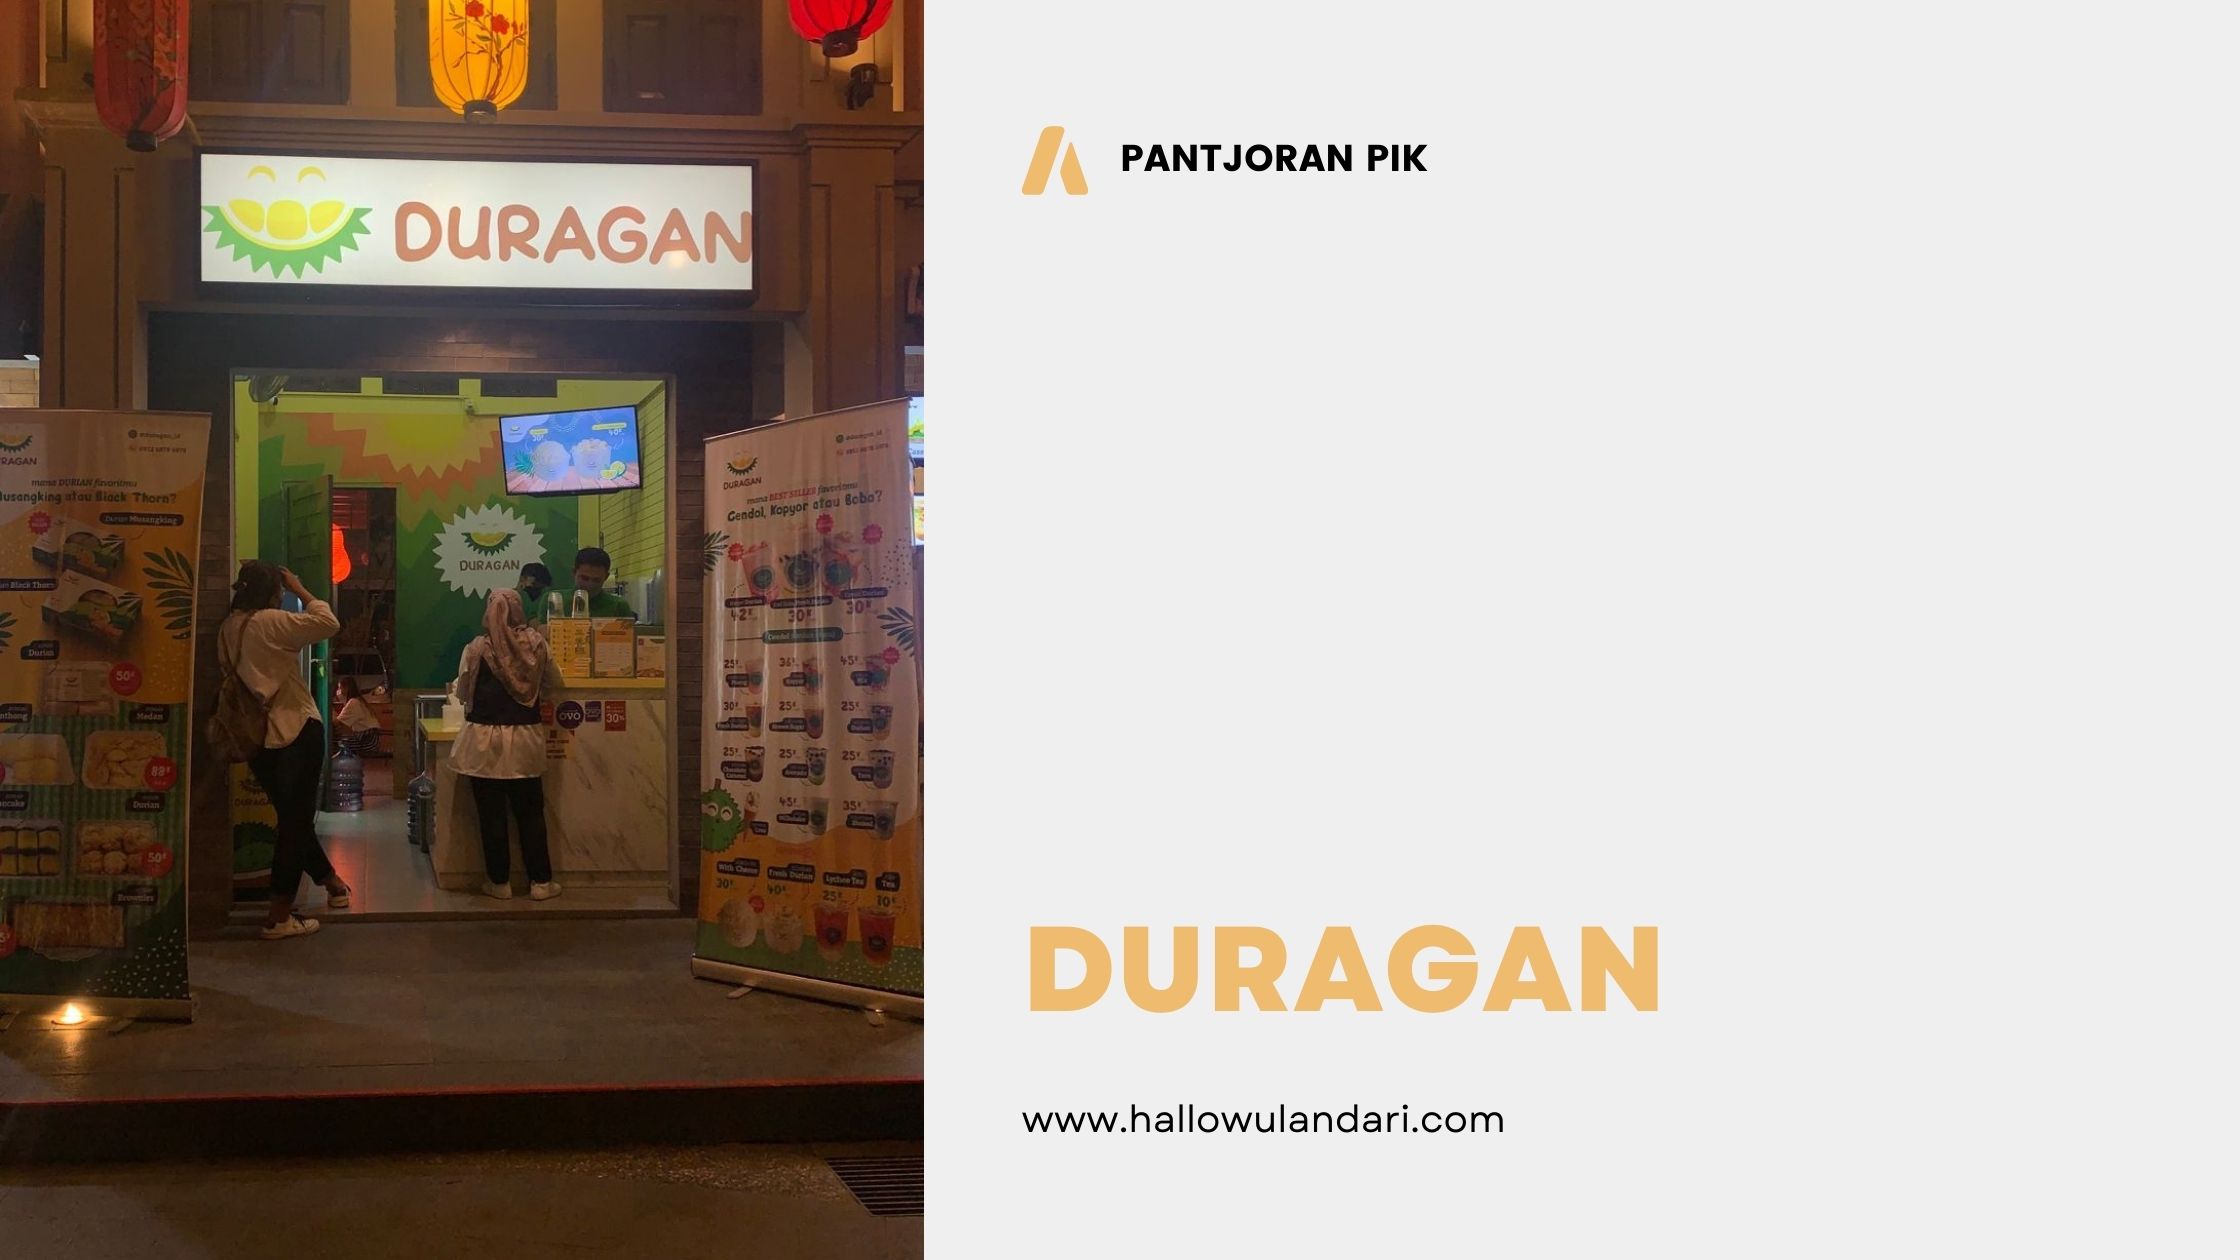 Duragan Ice Cream Durian Pantjoran PIK